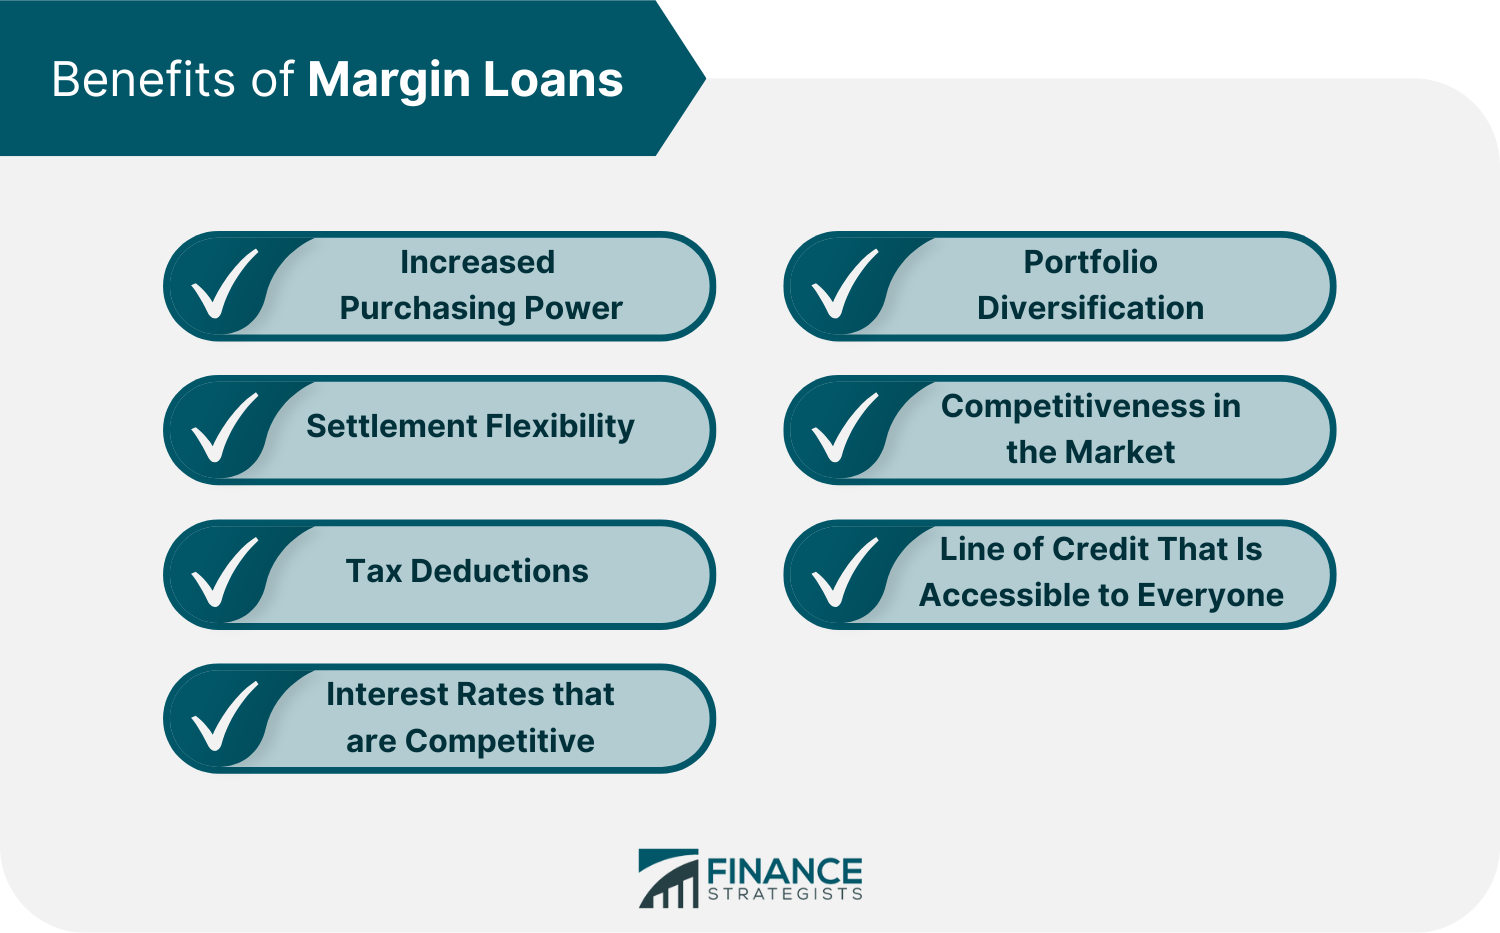 Benefits of Margin Loans